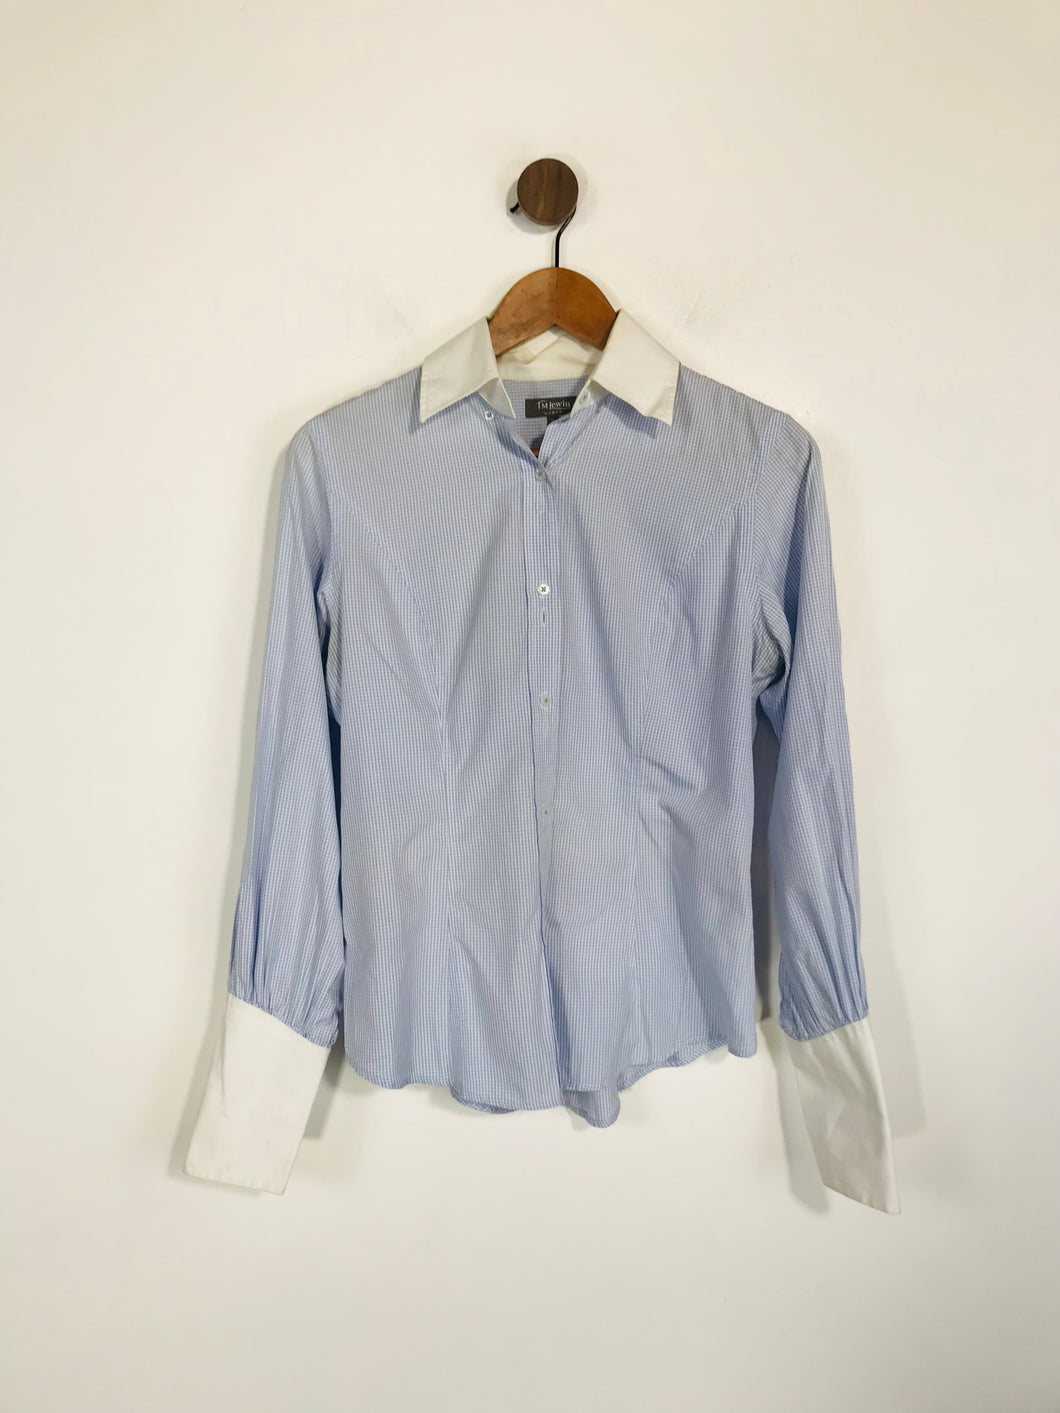 TM Lewin Women's Cotton Check Gingham Button-Up Shirt | UK10 | Multicoloured